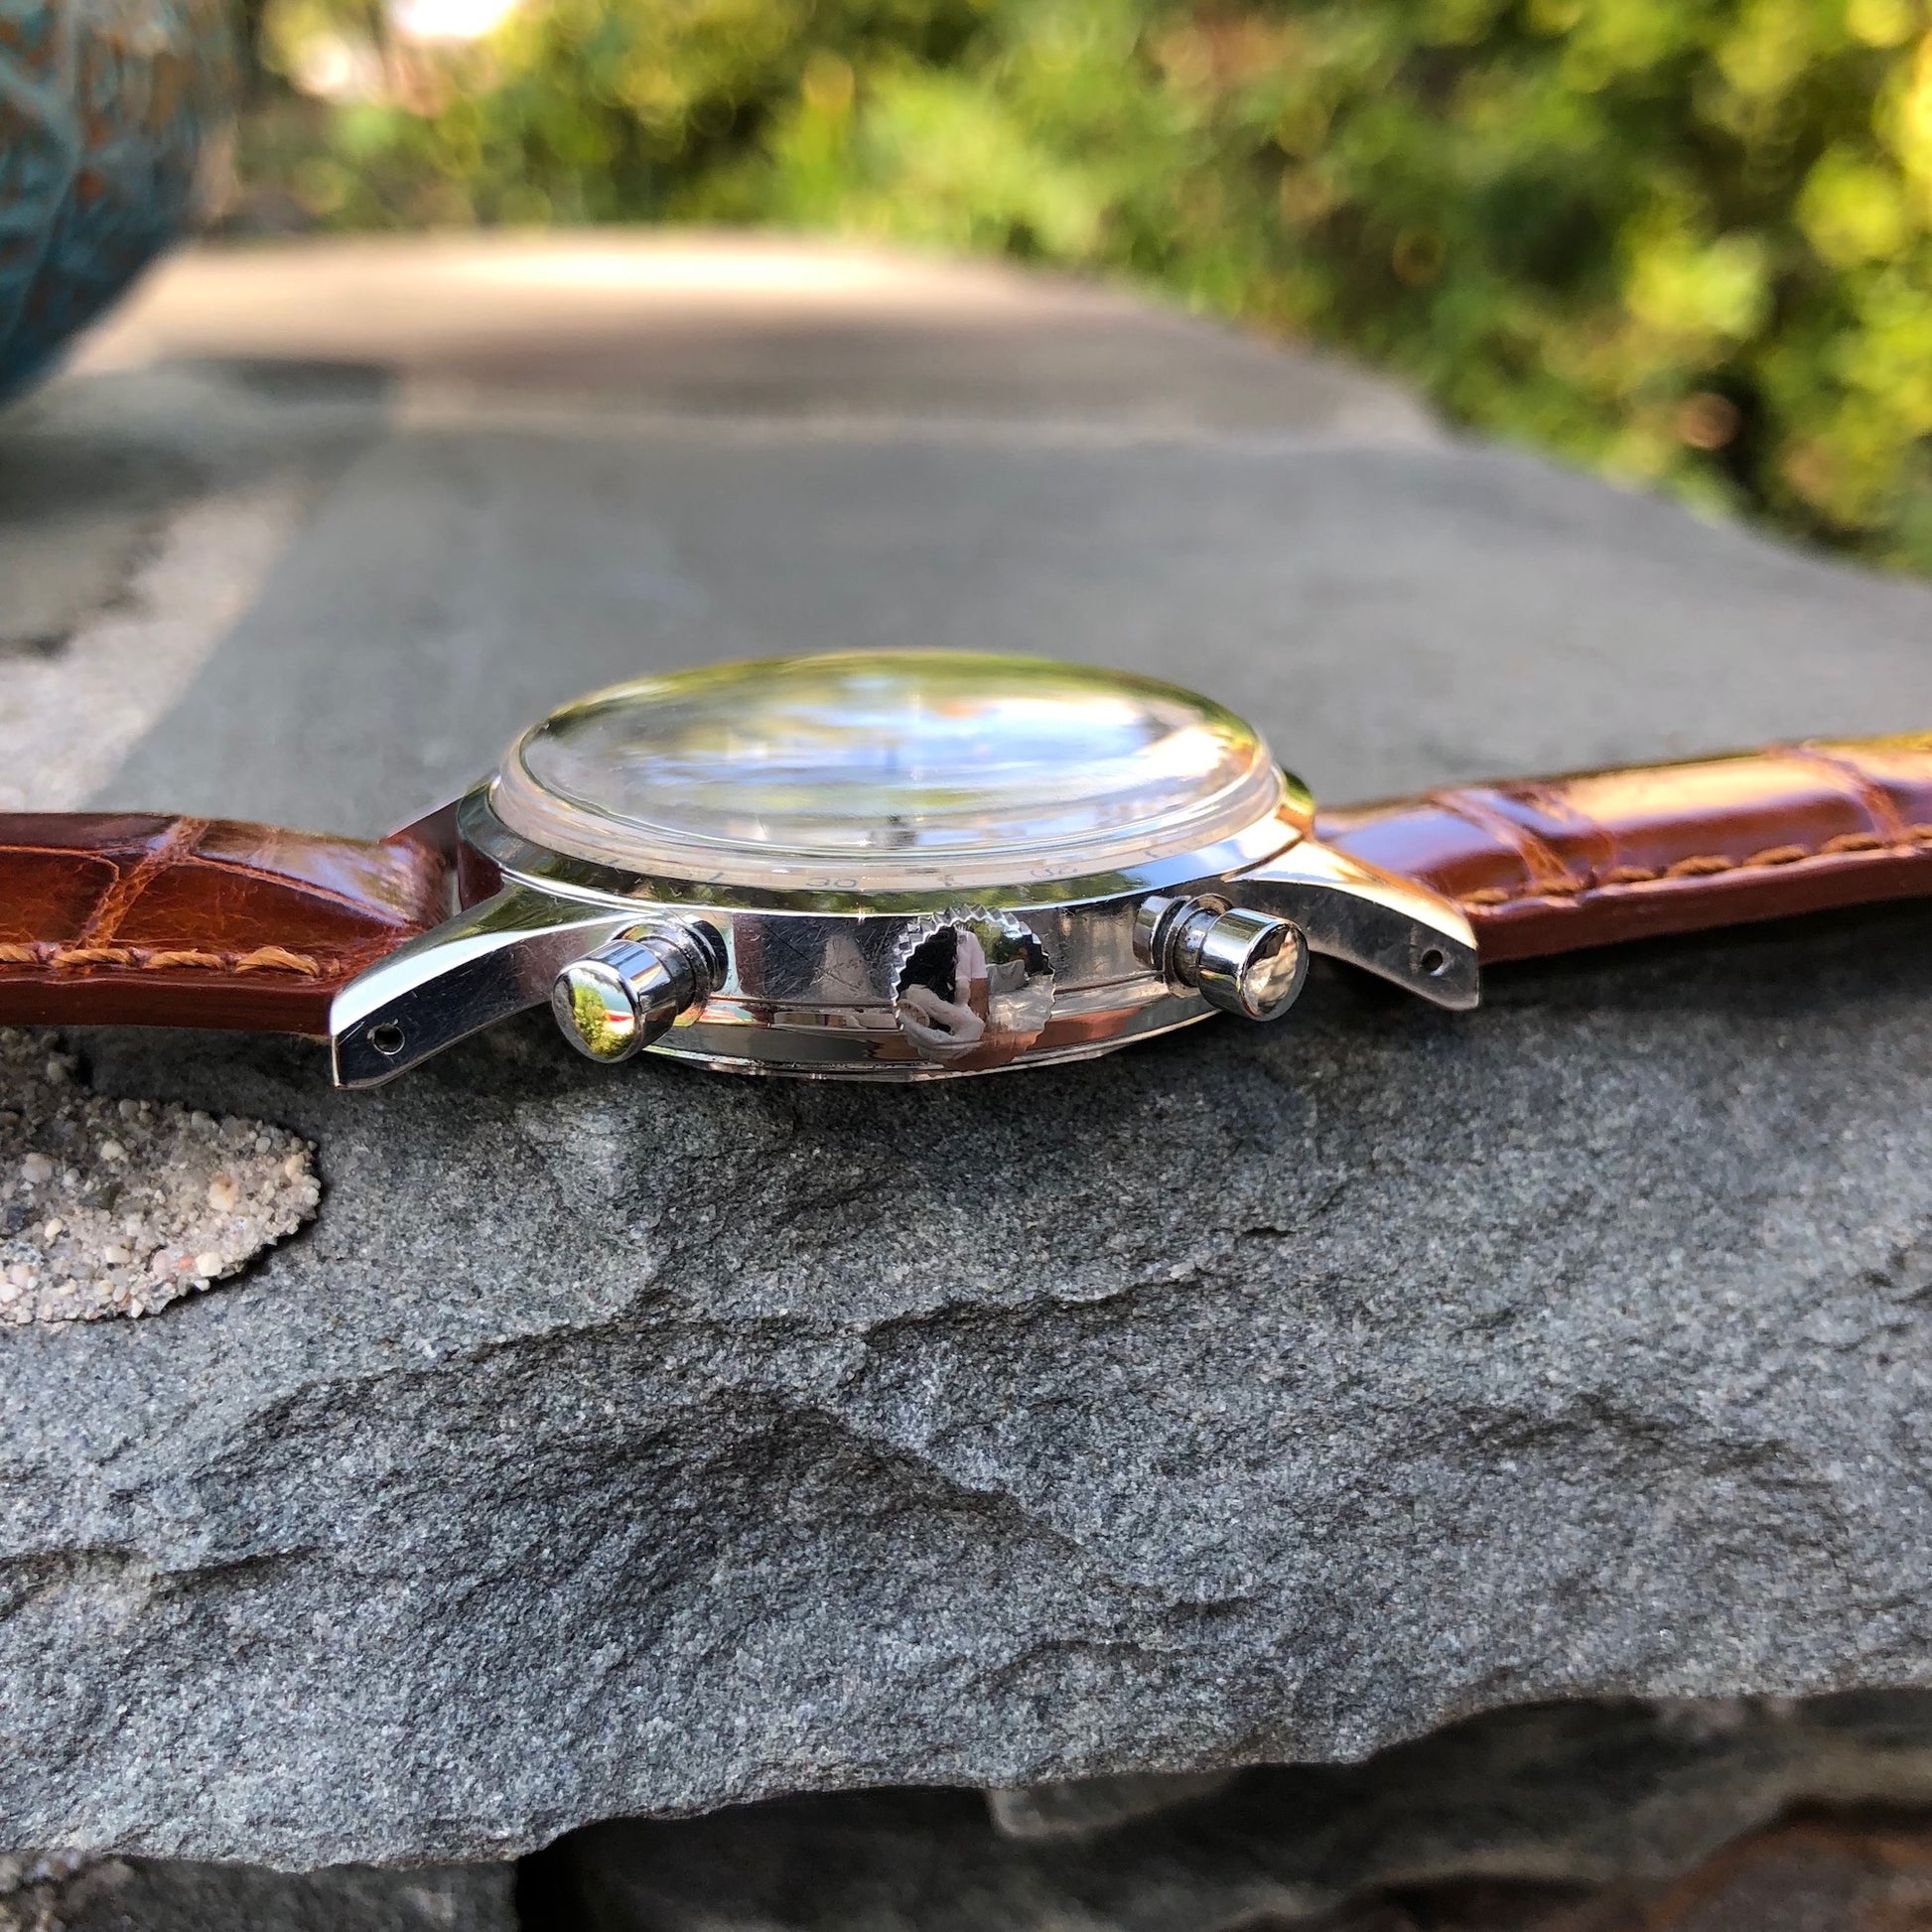 Vintage Heuer Pre Carrera 3336D Steel Decimal Tracking Chronograph 37mm Wristwatch - Hashtag Watch Company